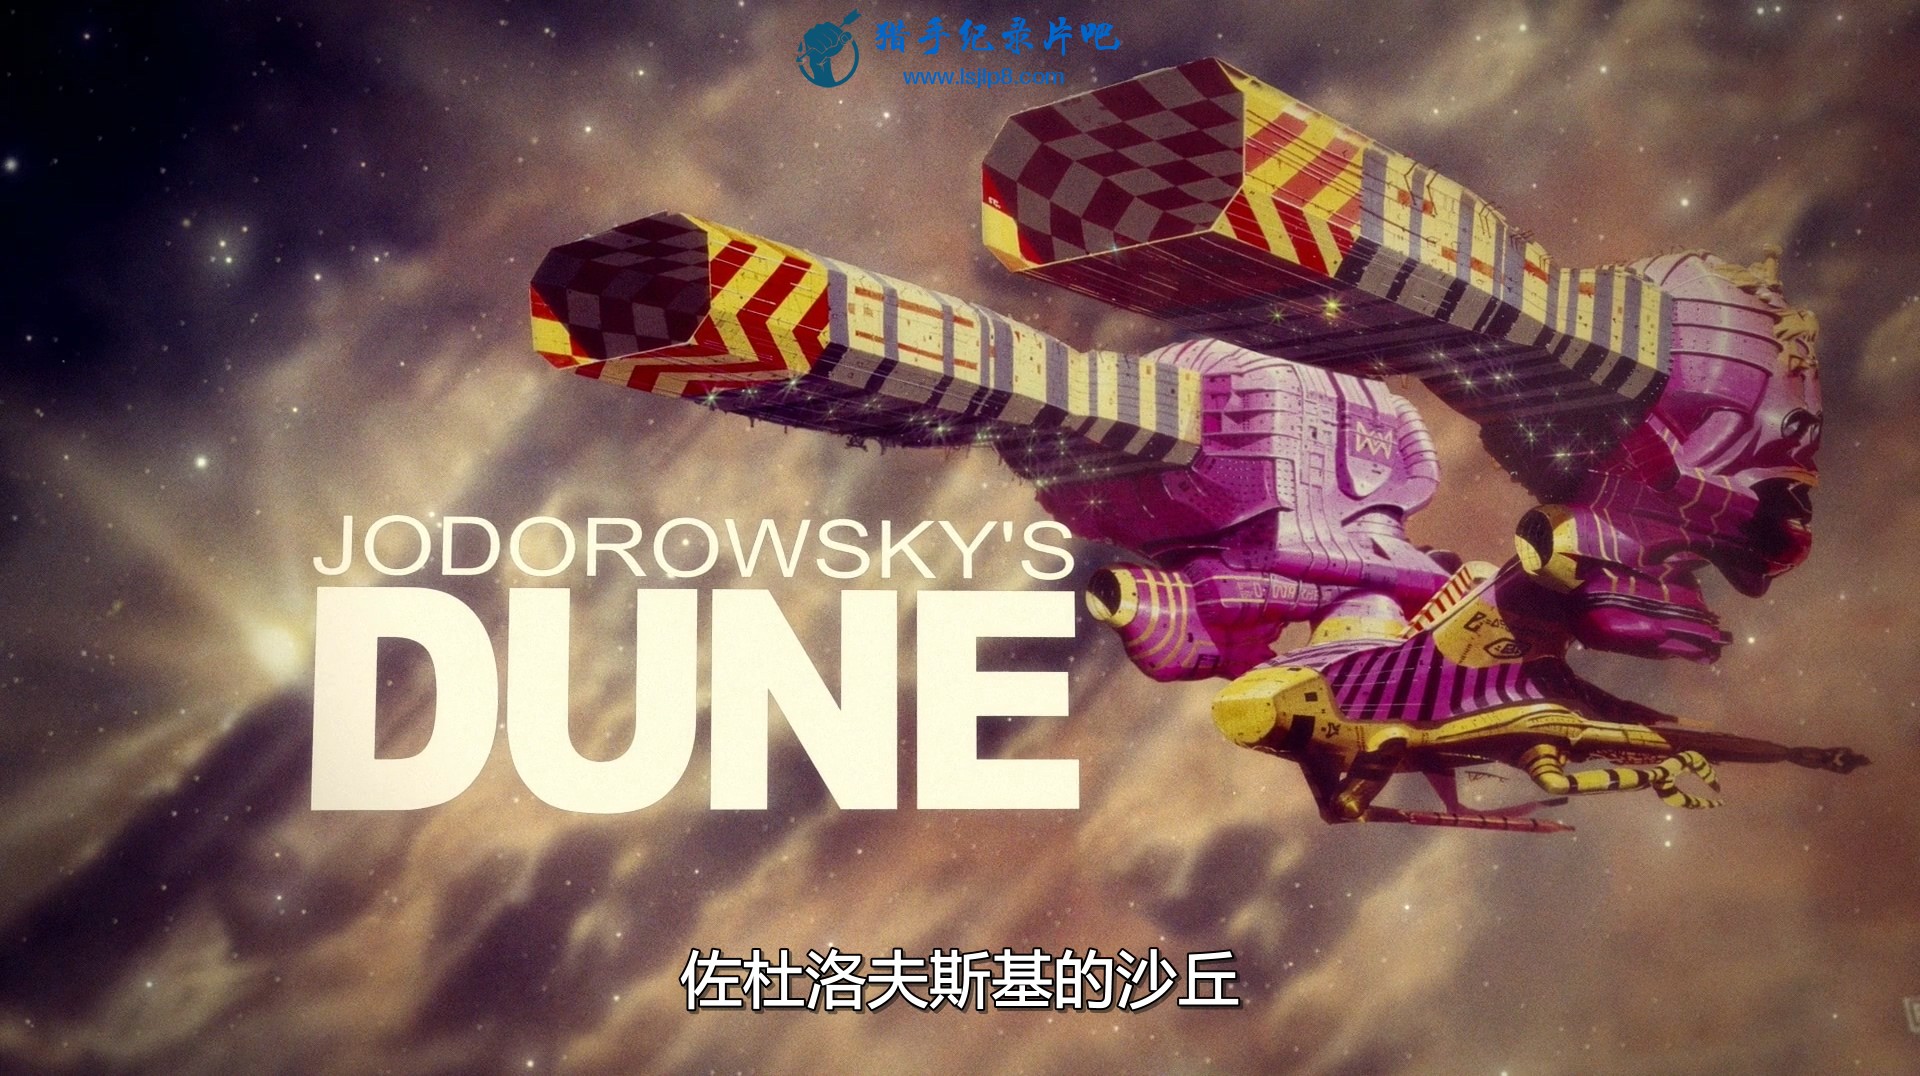 Jodorowskys.Dune.2013.BluRay.1080p.DTS.x264-CHD.mkv_20200709_104137.523.jpg